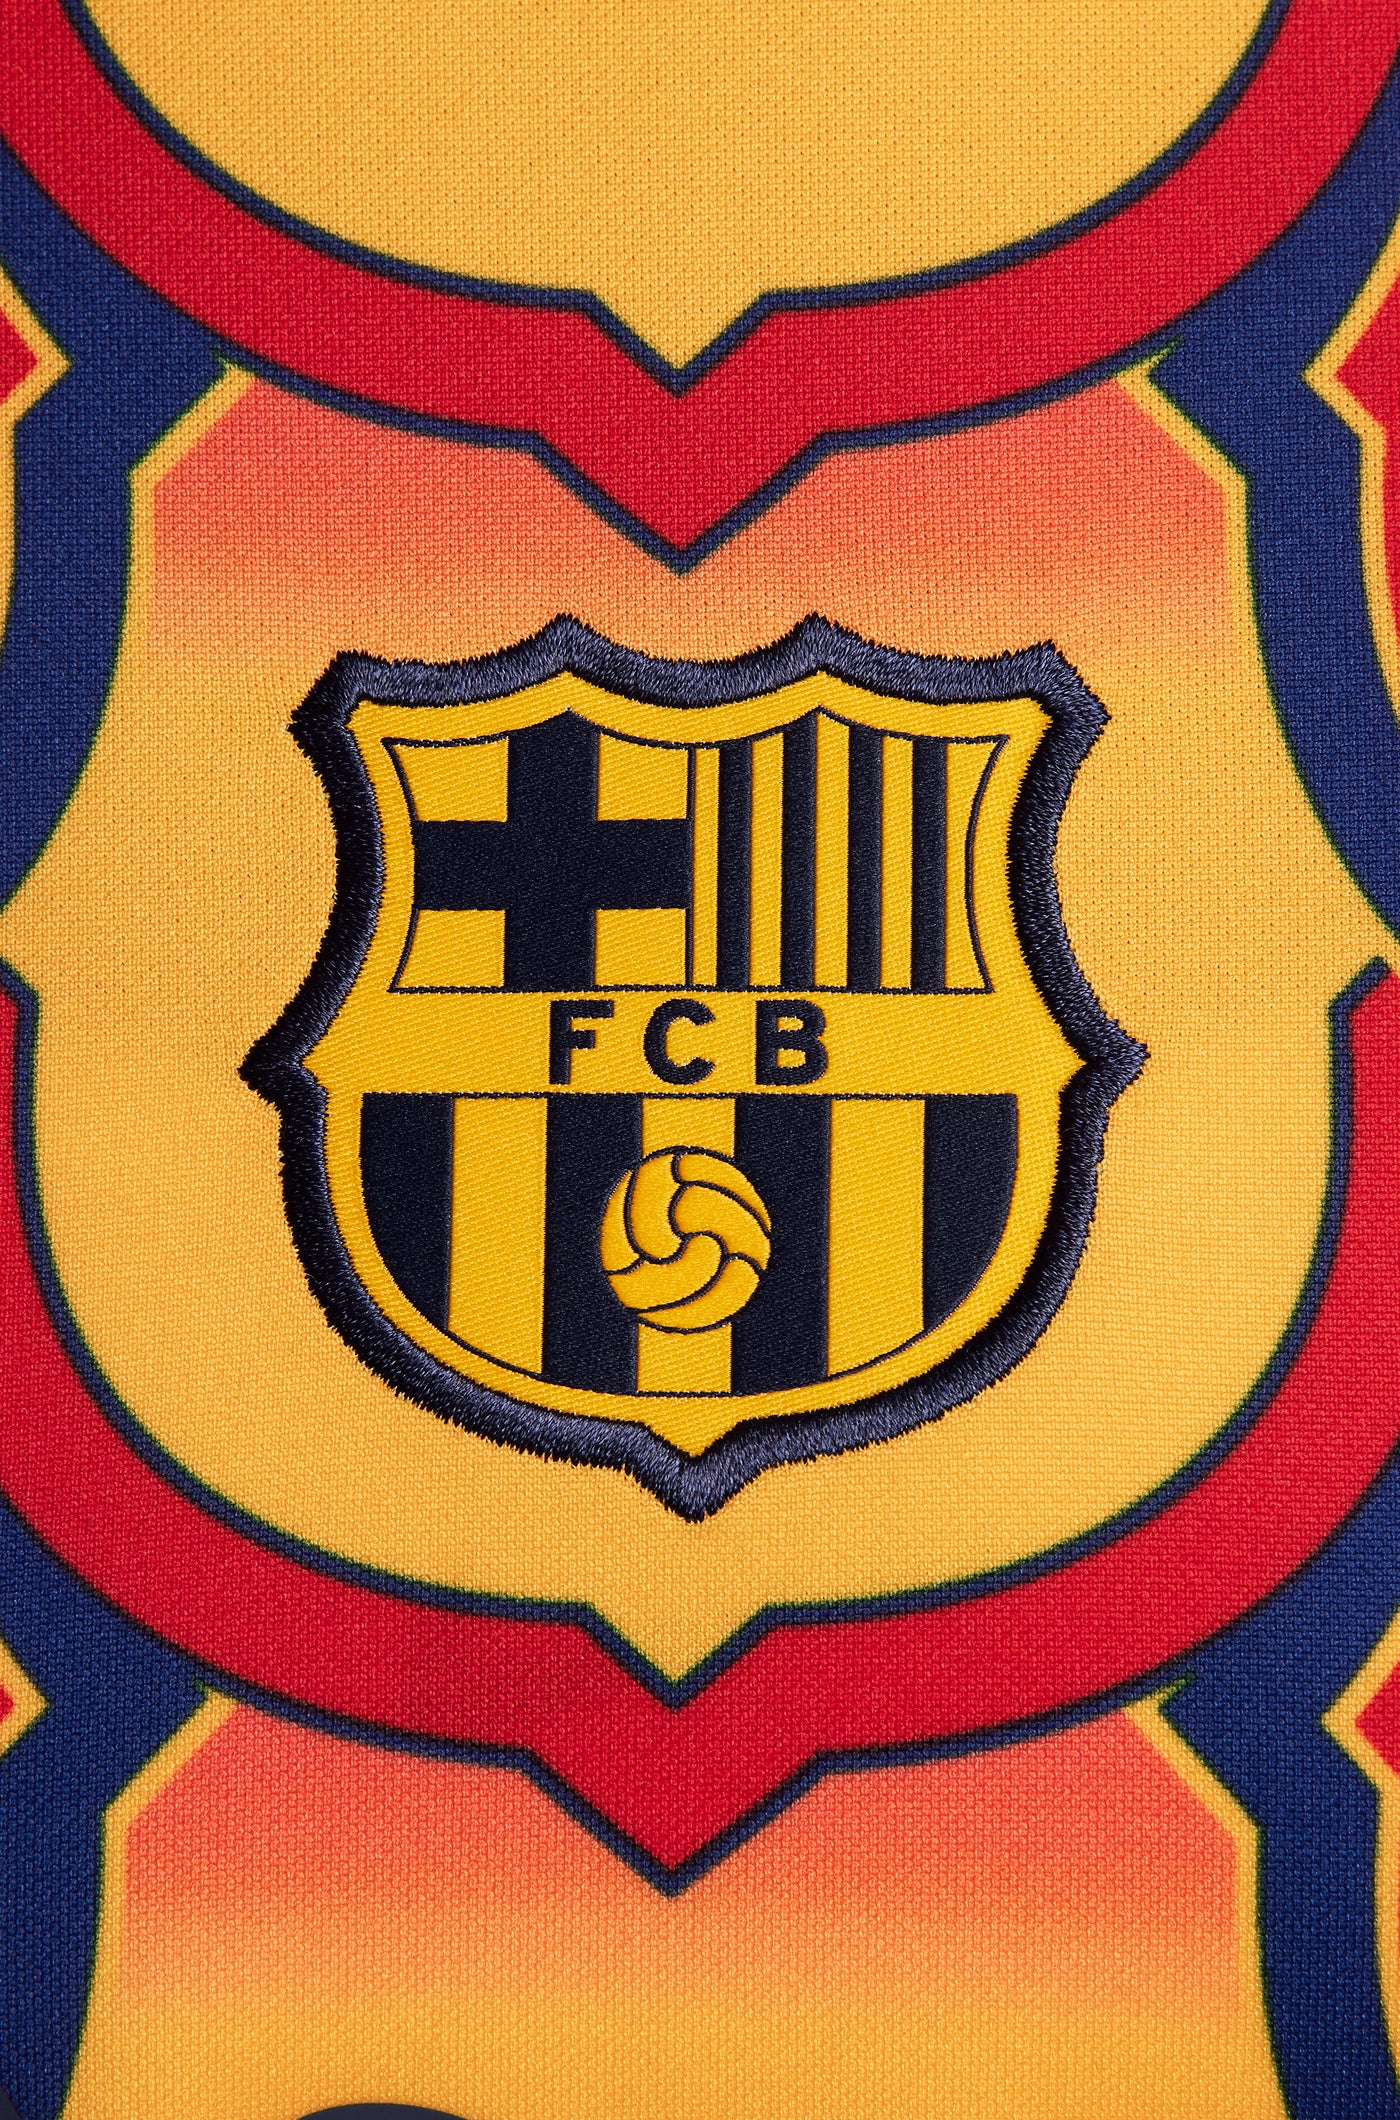 Samarreta Pre-Partit gold del FC Barcelona - Dona